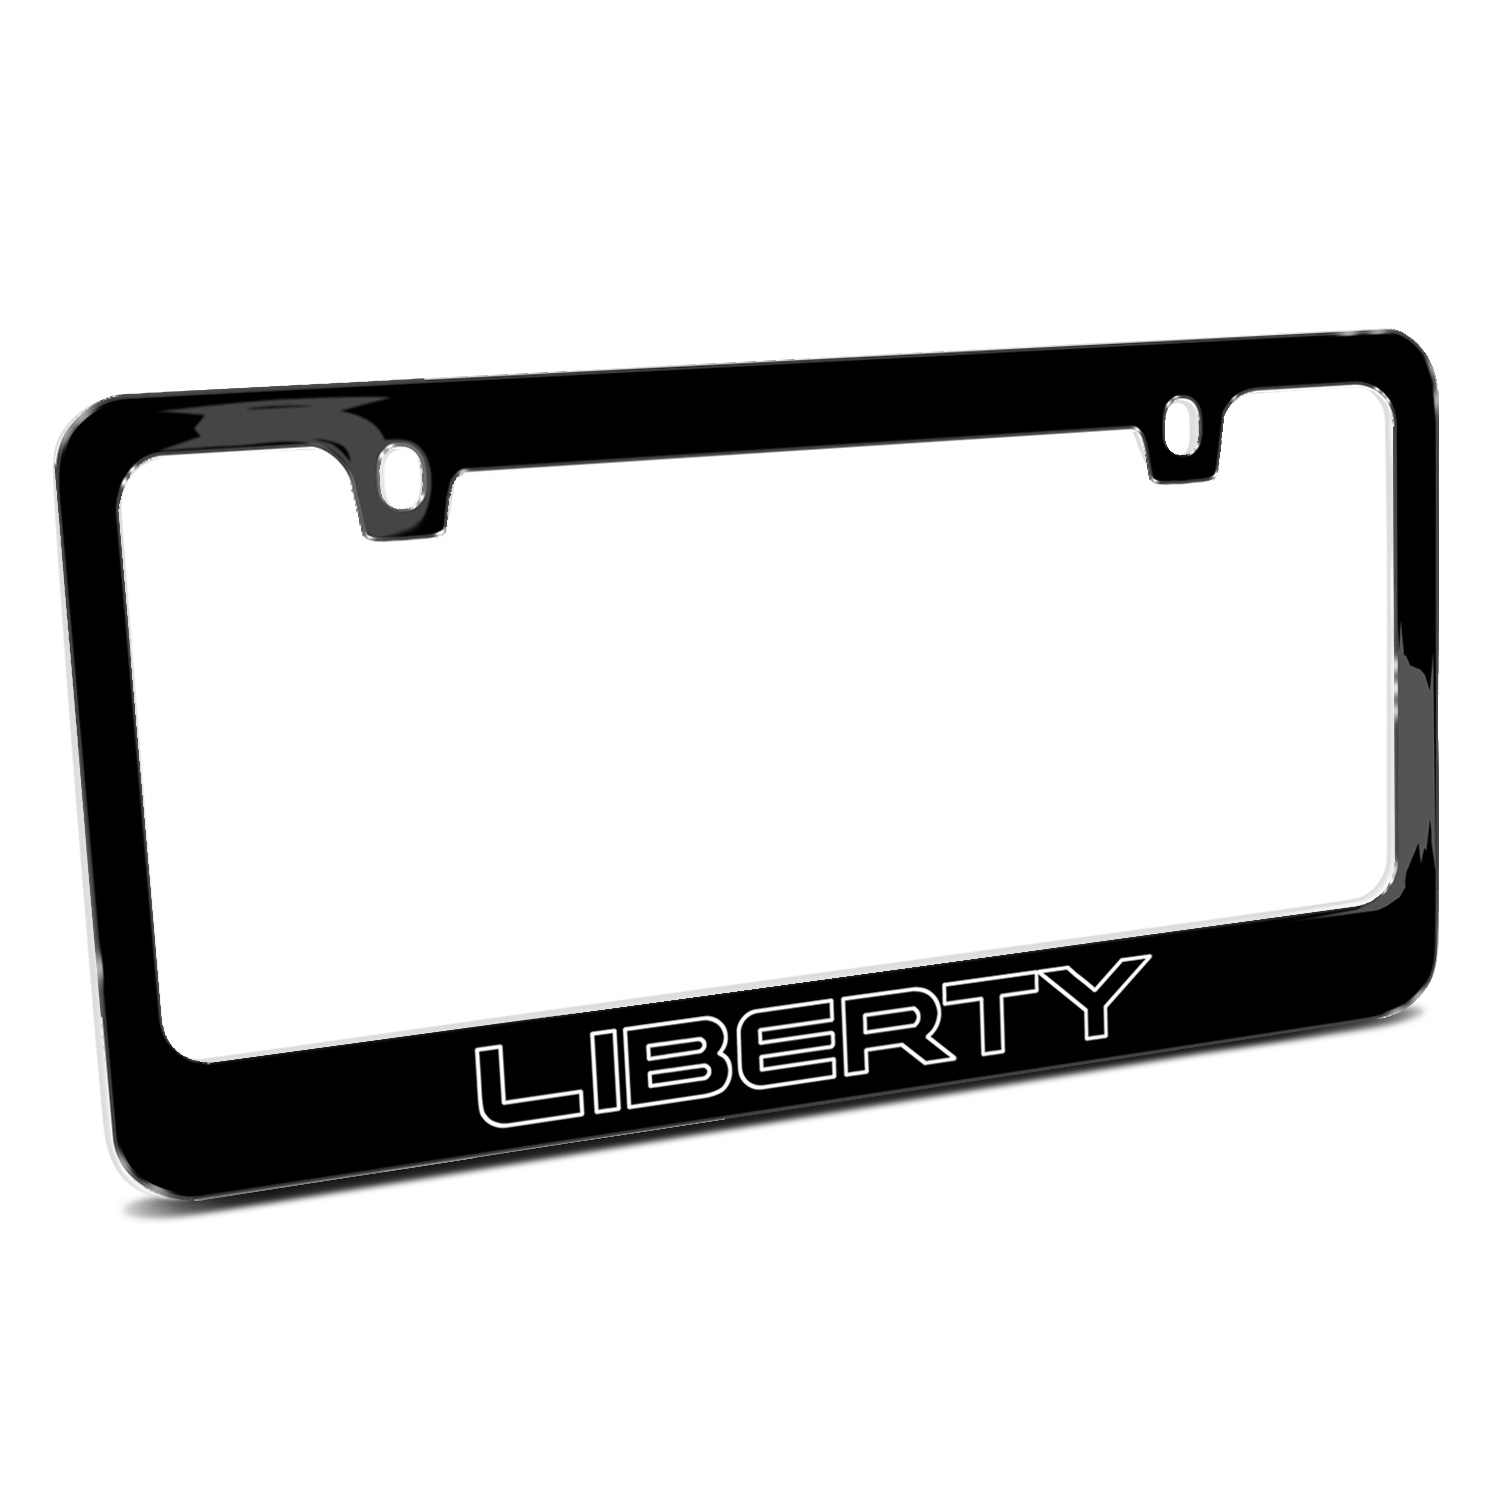 Jeep Liberty Outline Black Metal License Plate Frame